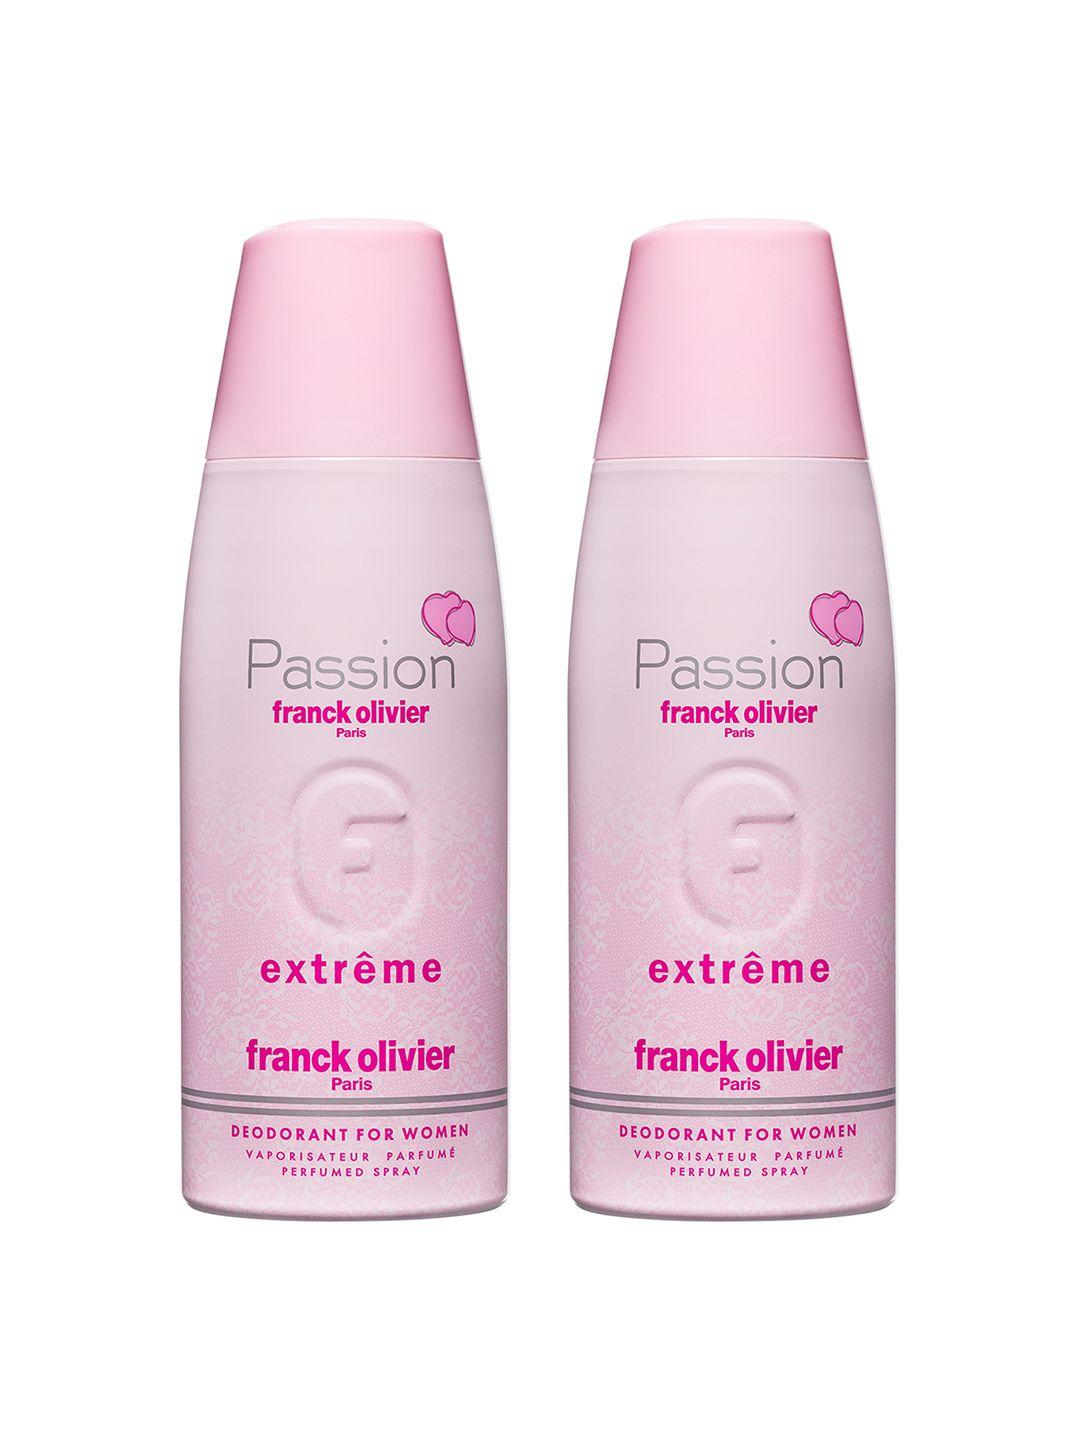 franck olivier set of 2 passion extreme deodorant spray - 250 ml each